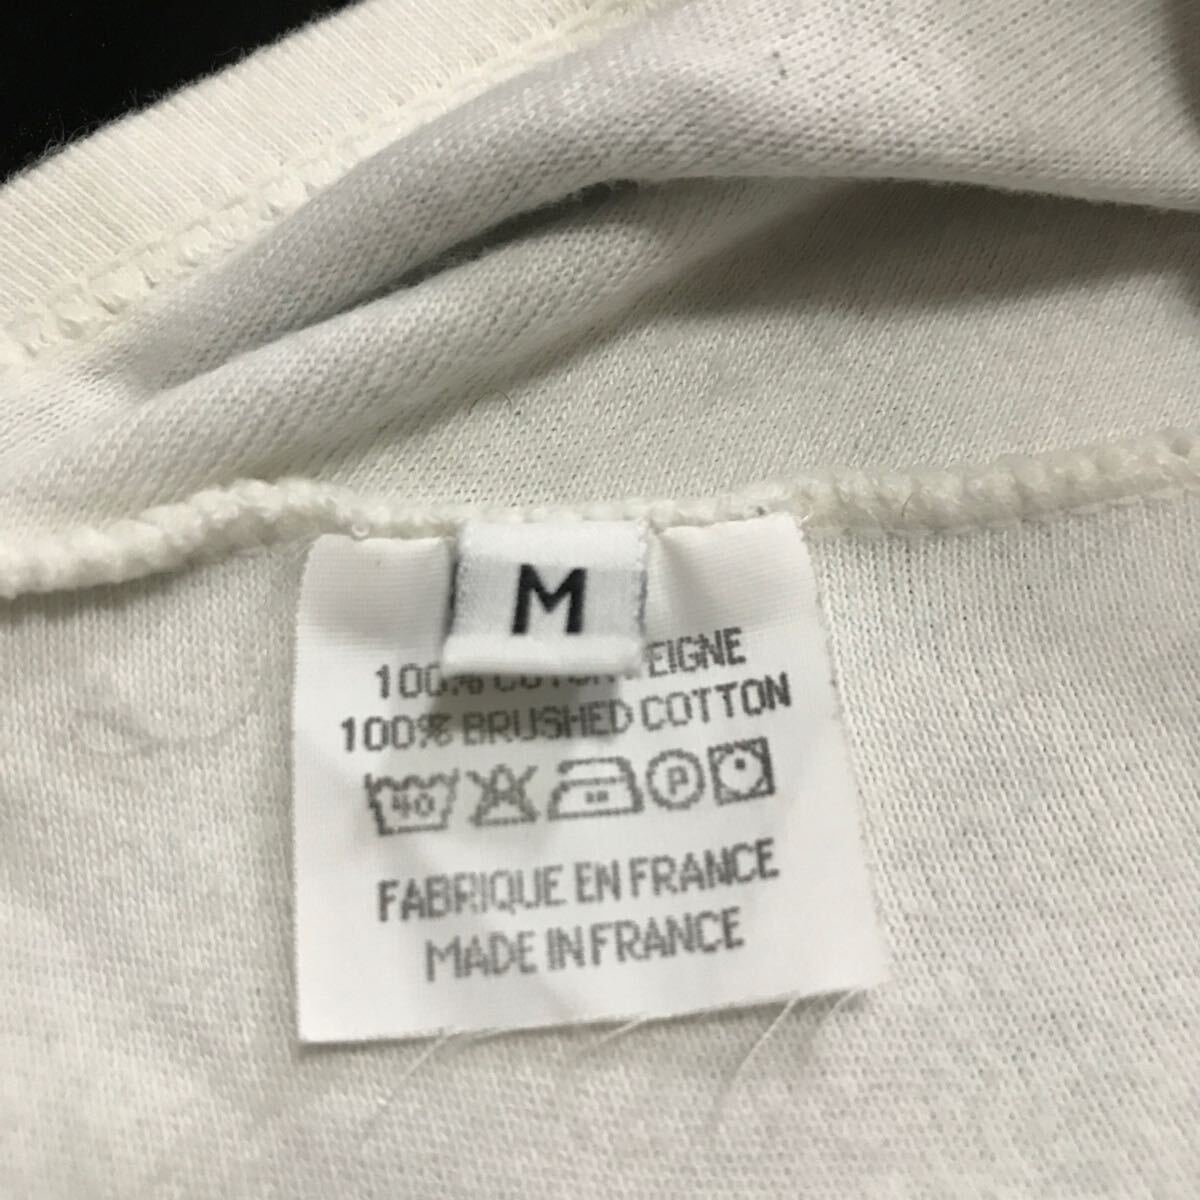 MARTIN MARGIELA/Made in France/artisanal/Long Sleeve Tee/Medium/マルタンマルジェラ/アーティザナル/長袖 Tシャツ/ロンT/騙し絵/転写